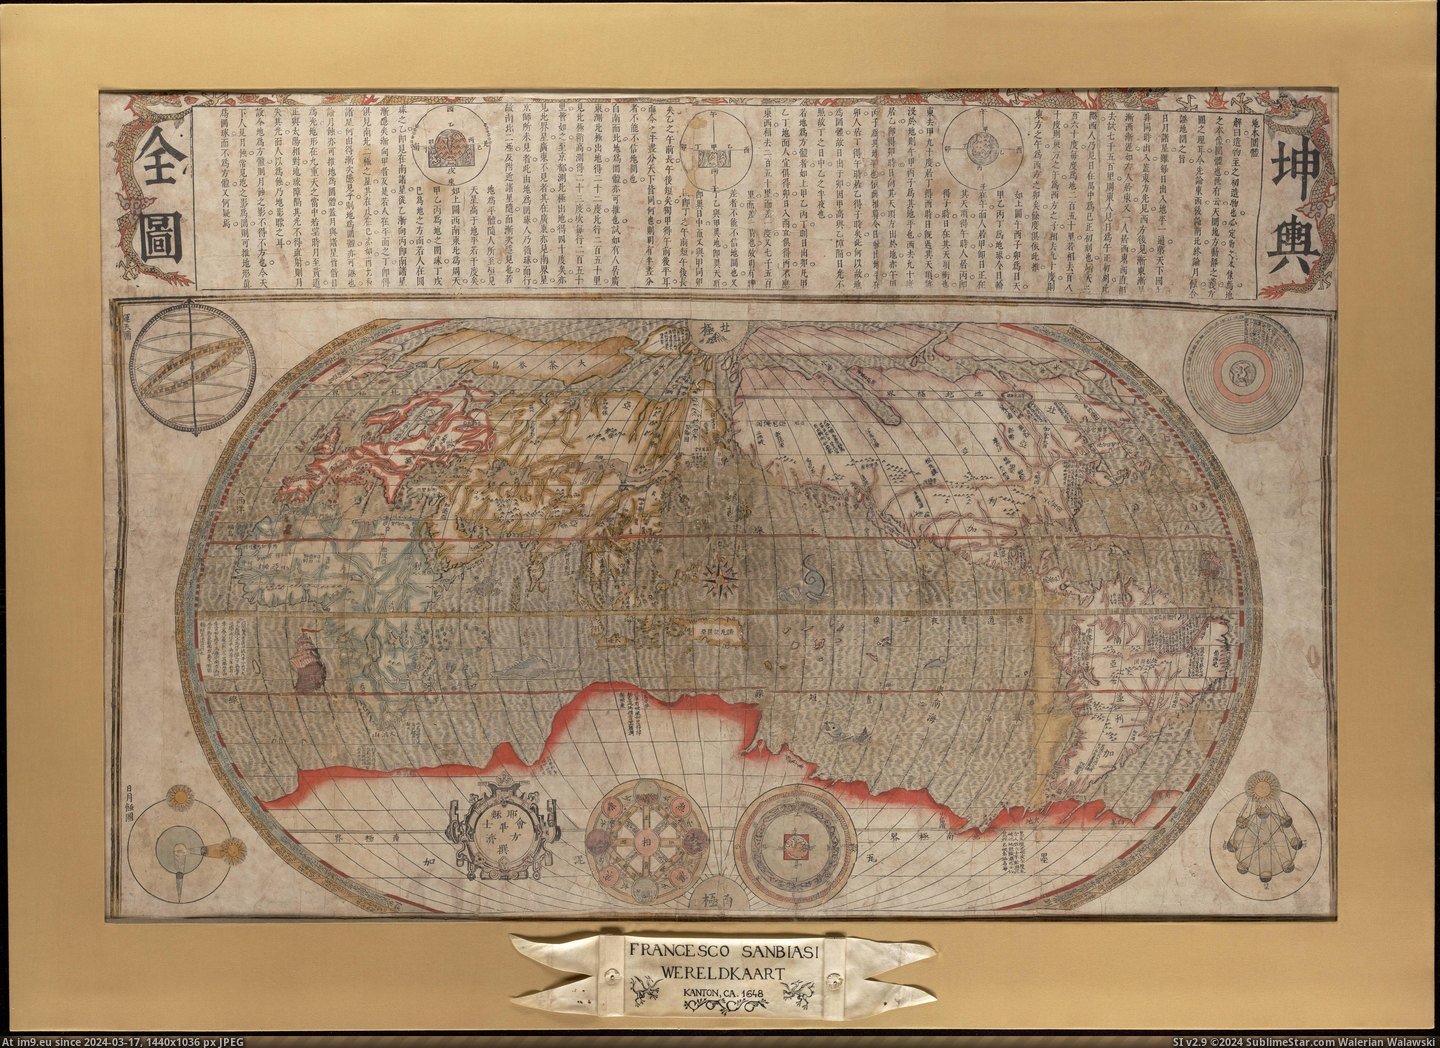 #World #Map #8682x6269 #Sanbiasi #Chinese #Francesco [Mapporn] Chinese World map, 1648, By Francesco Sanbiasi [8682x6269] Pic. (Bild von album My r/MAPS favs))